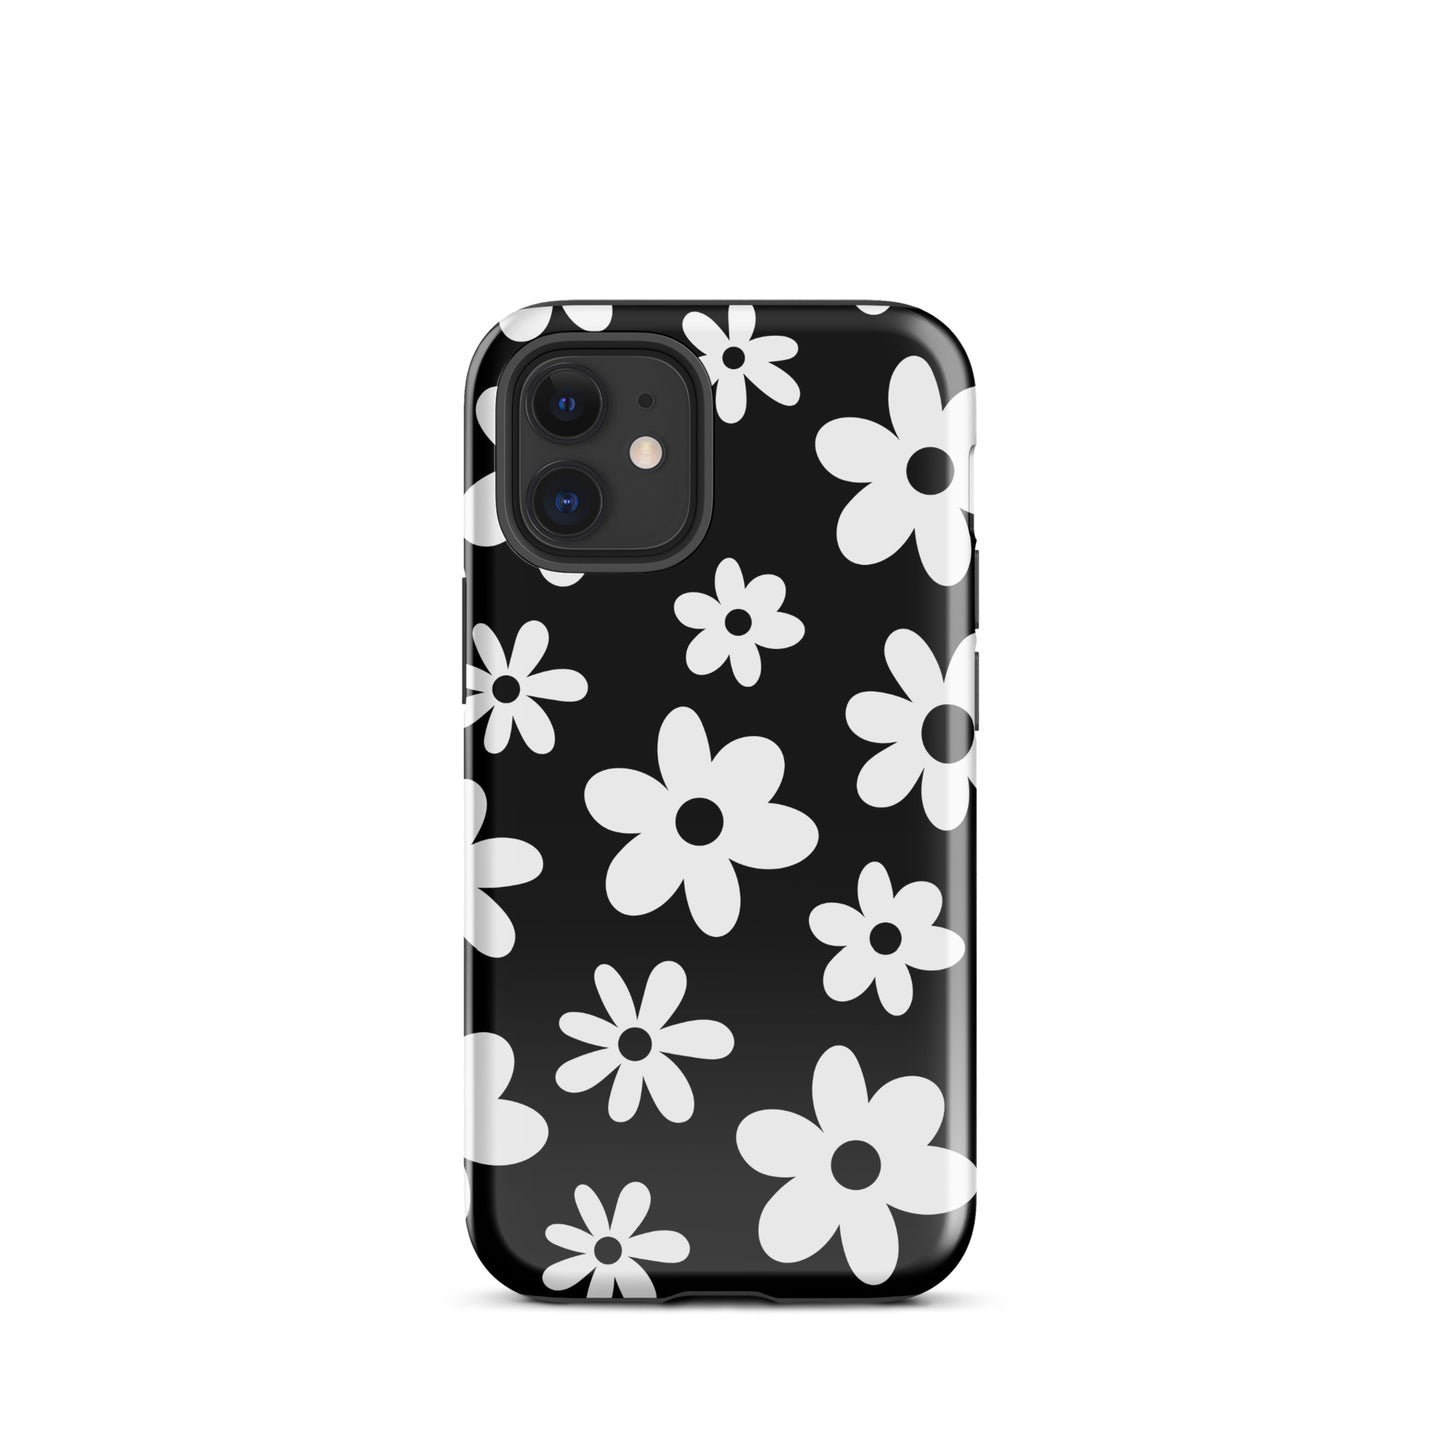 Black Flower Power iPhone Case